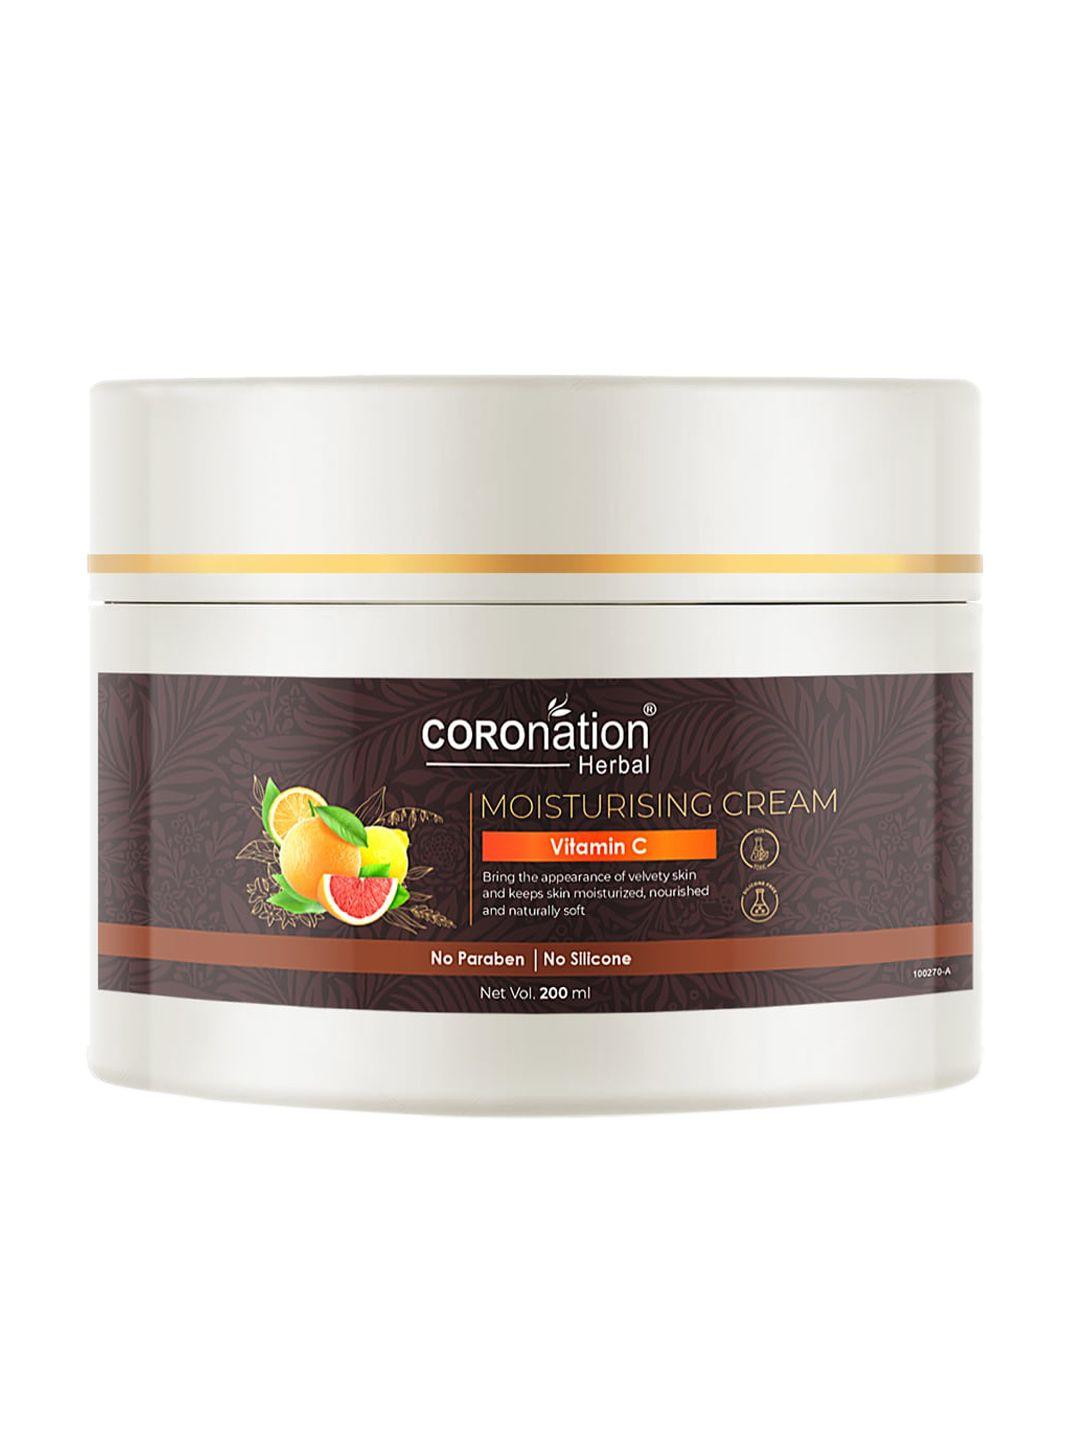 coronation herbal vitamin c moisturising cream with shea butter for radiance & glow- 200ml